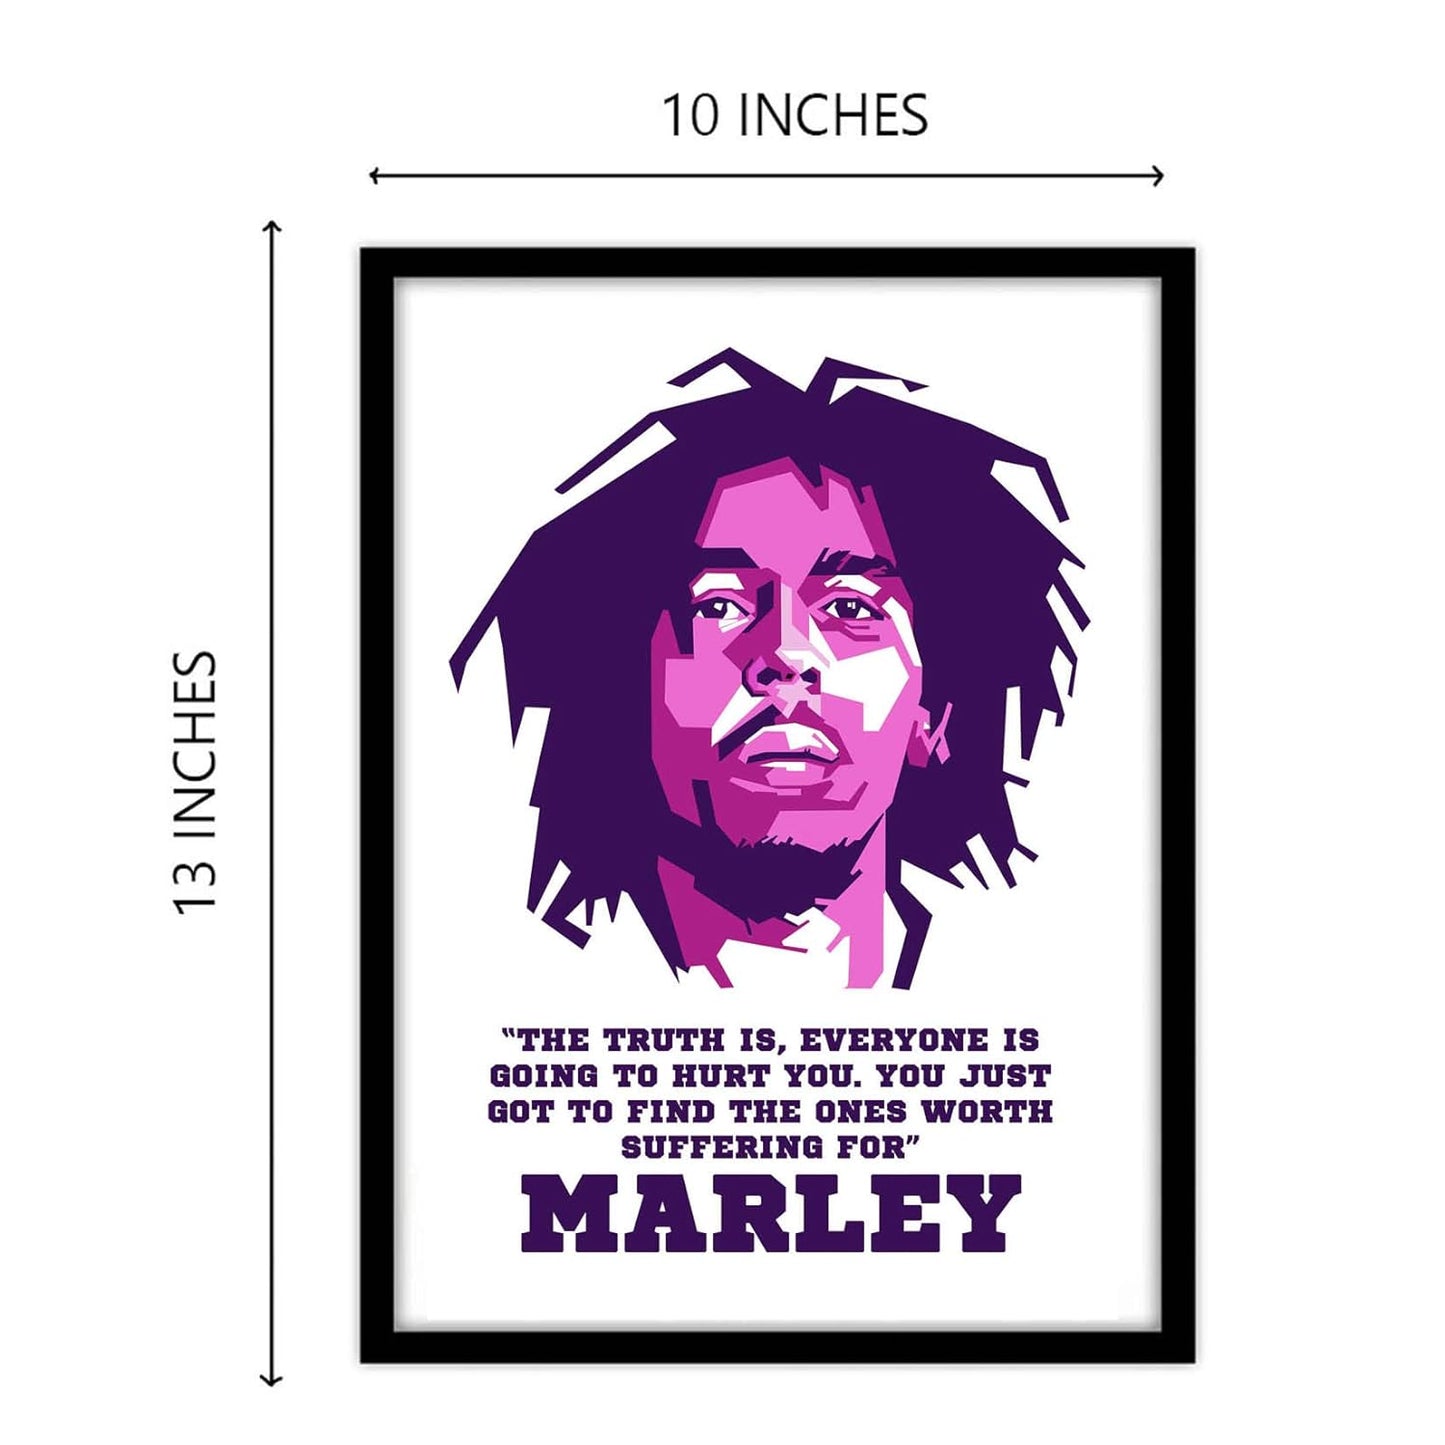 Bob Marley Art work